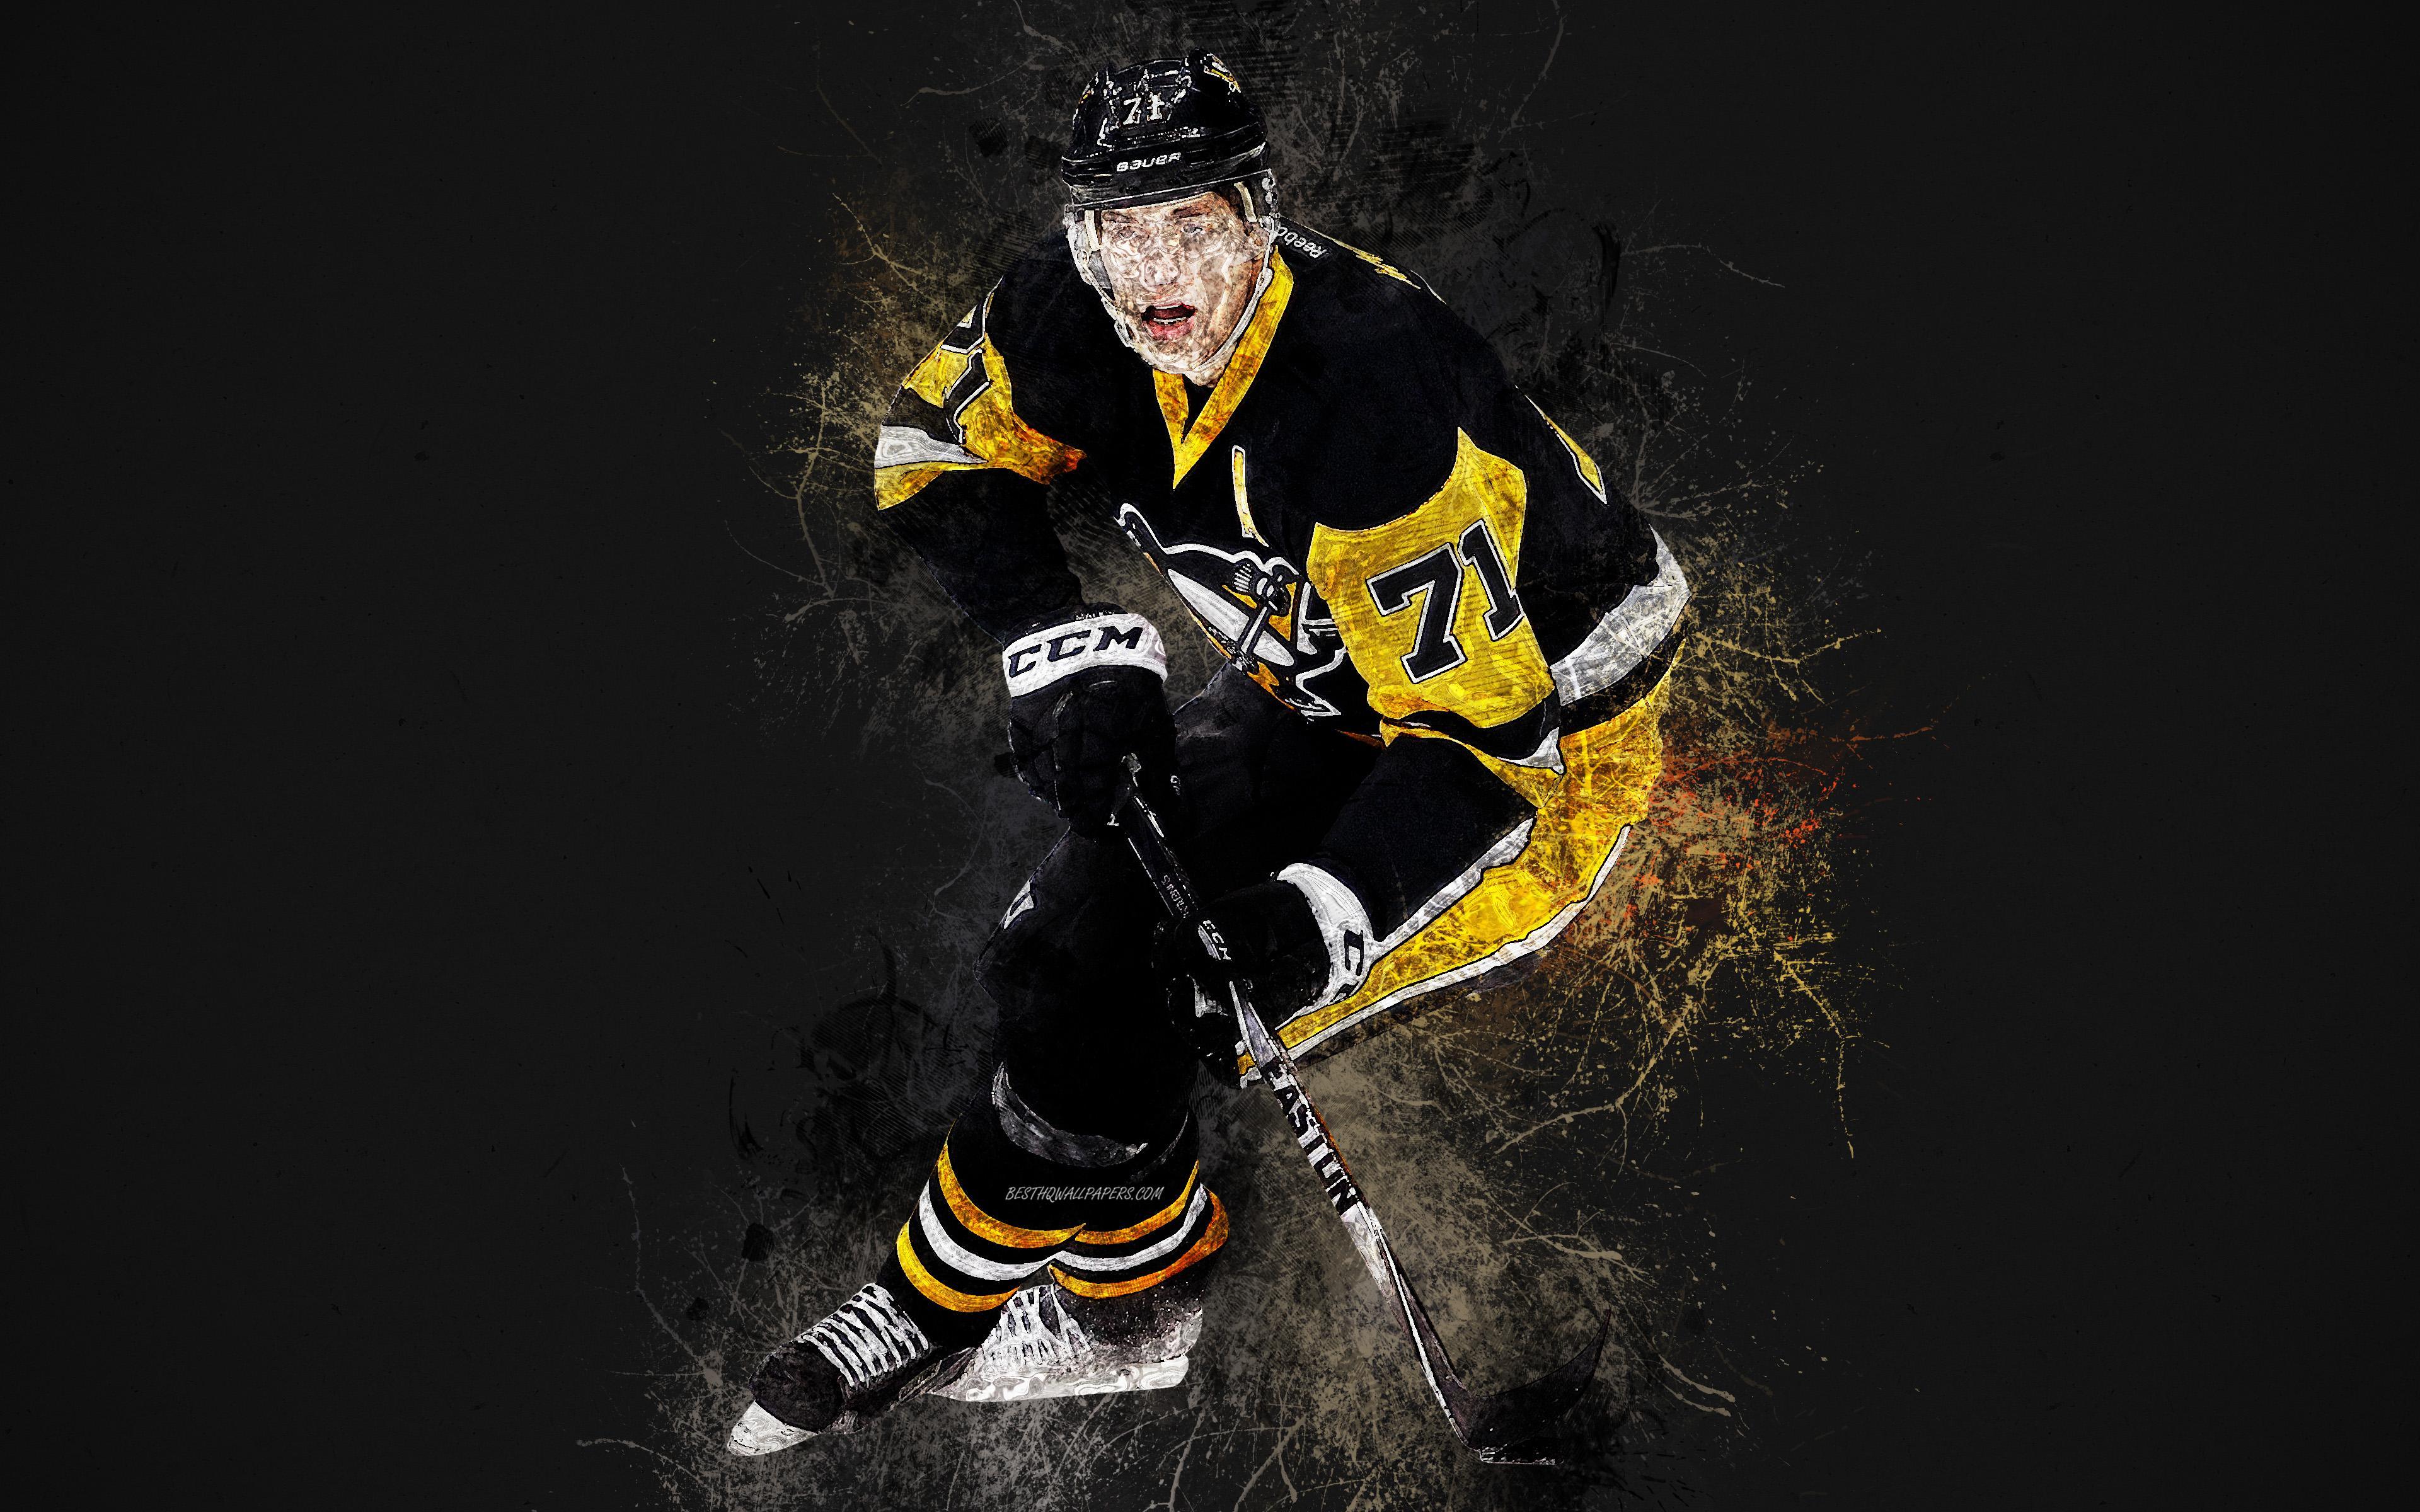 Download wallpaper Evgeni Malkin, 4k, Russian hockey player, art